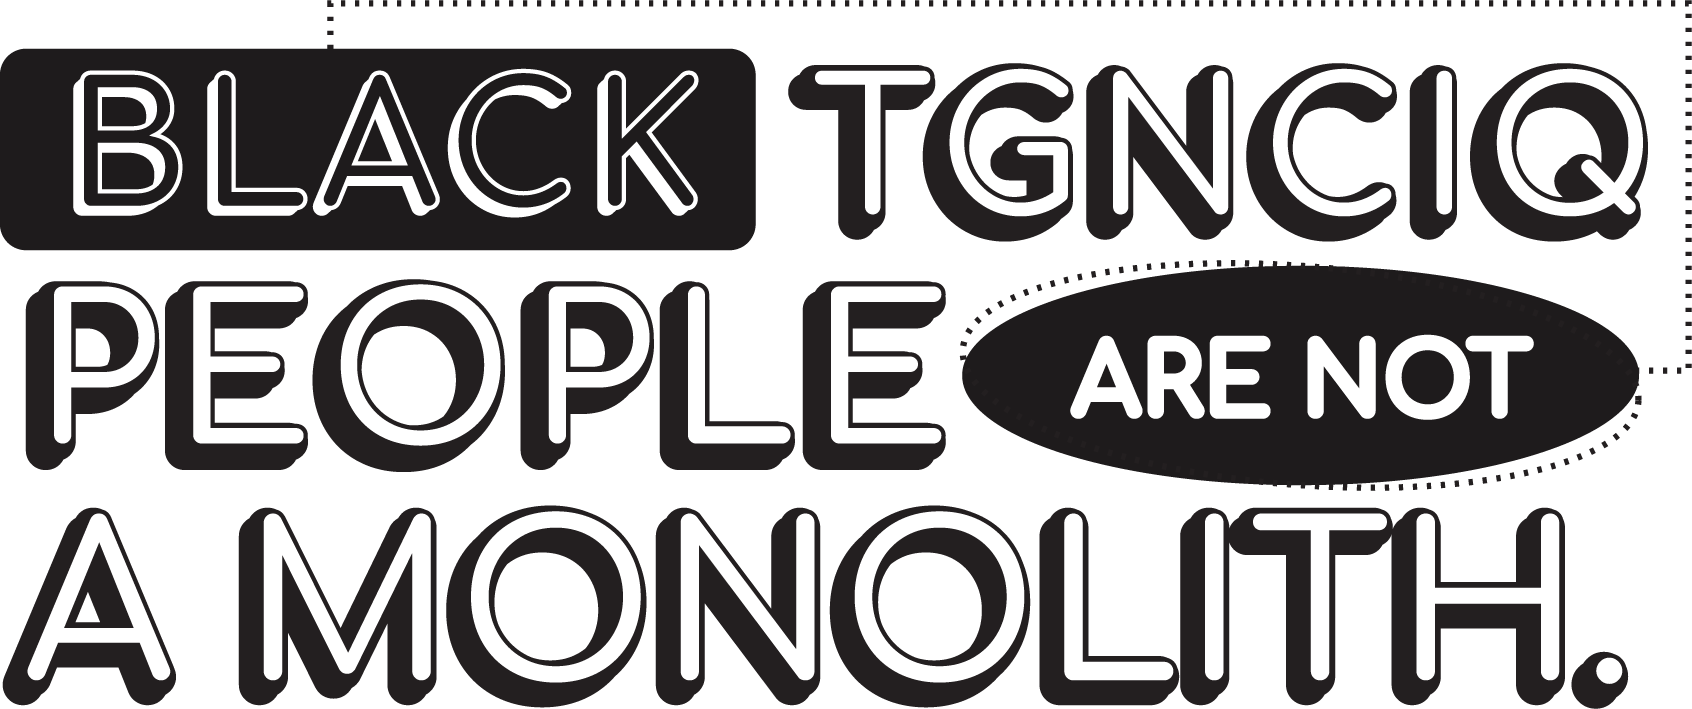 Black TGNCIQ people are not a monolith.